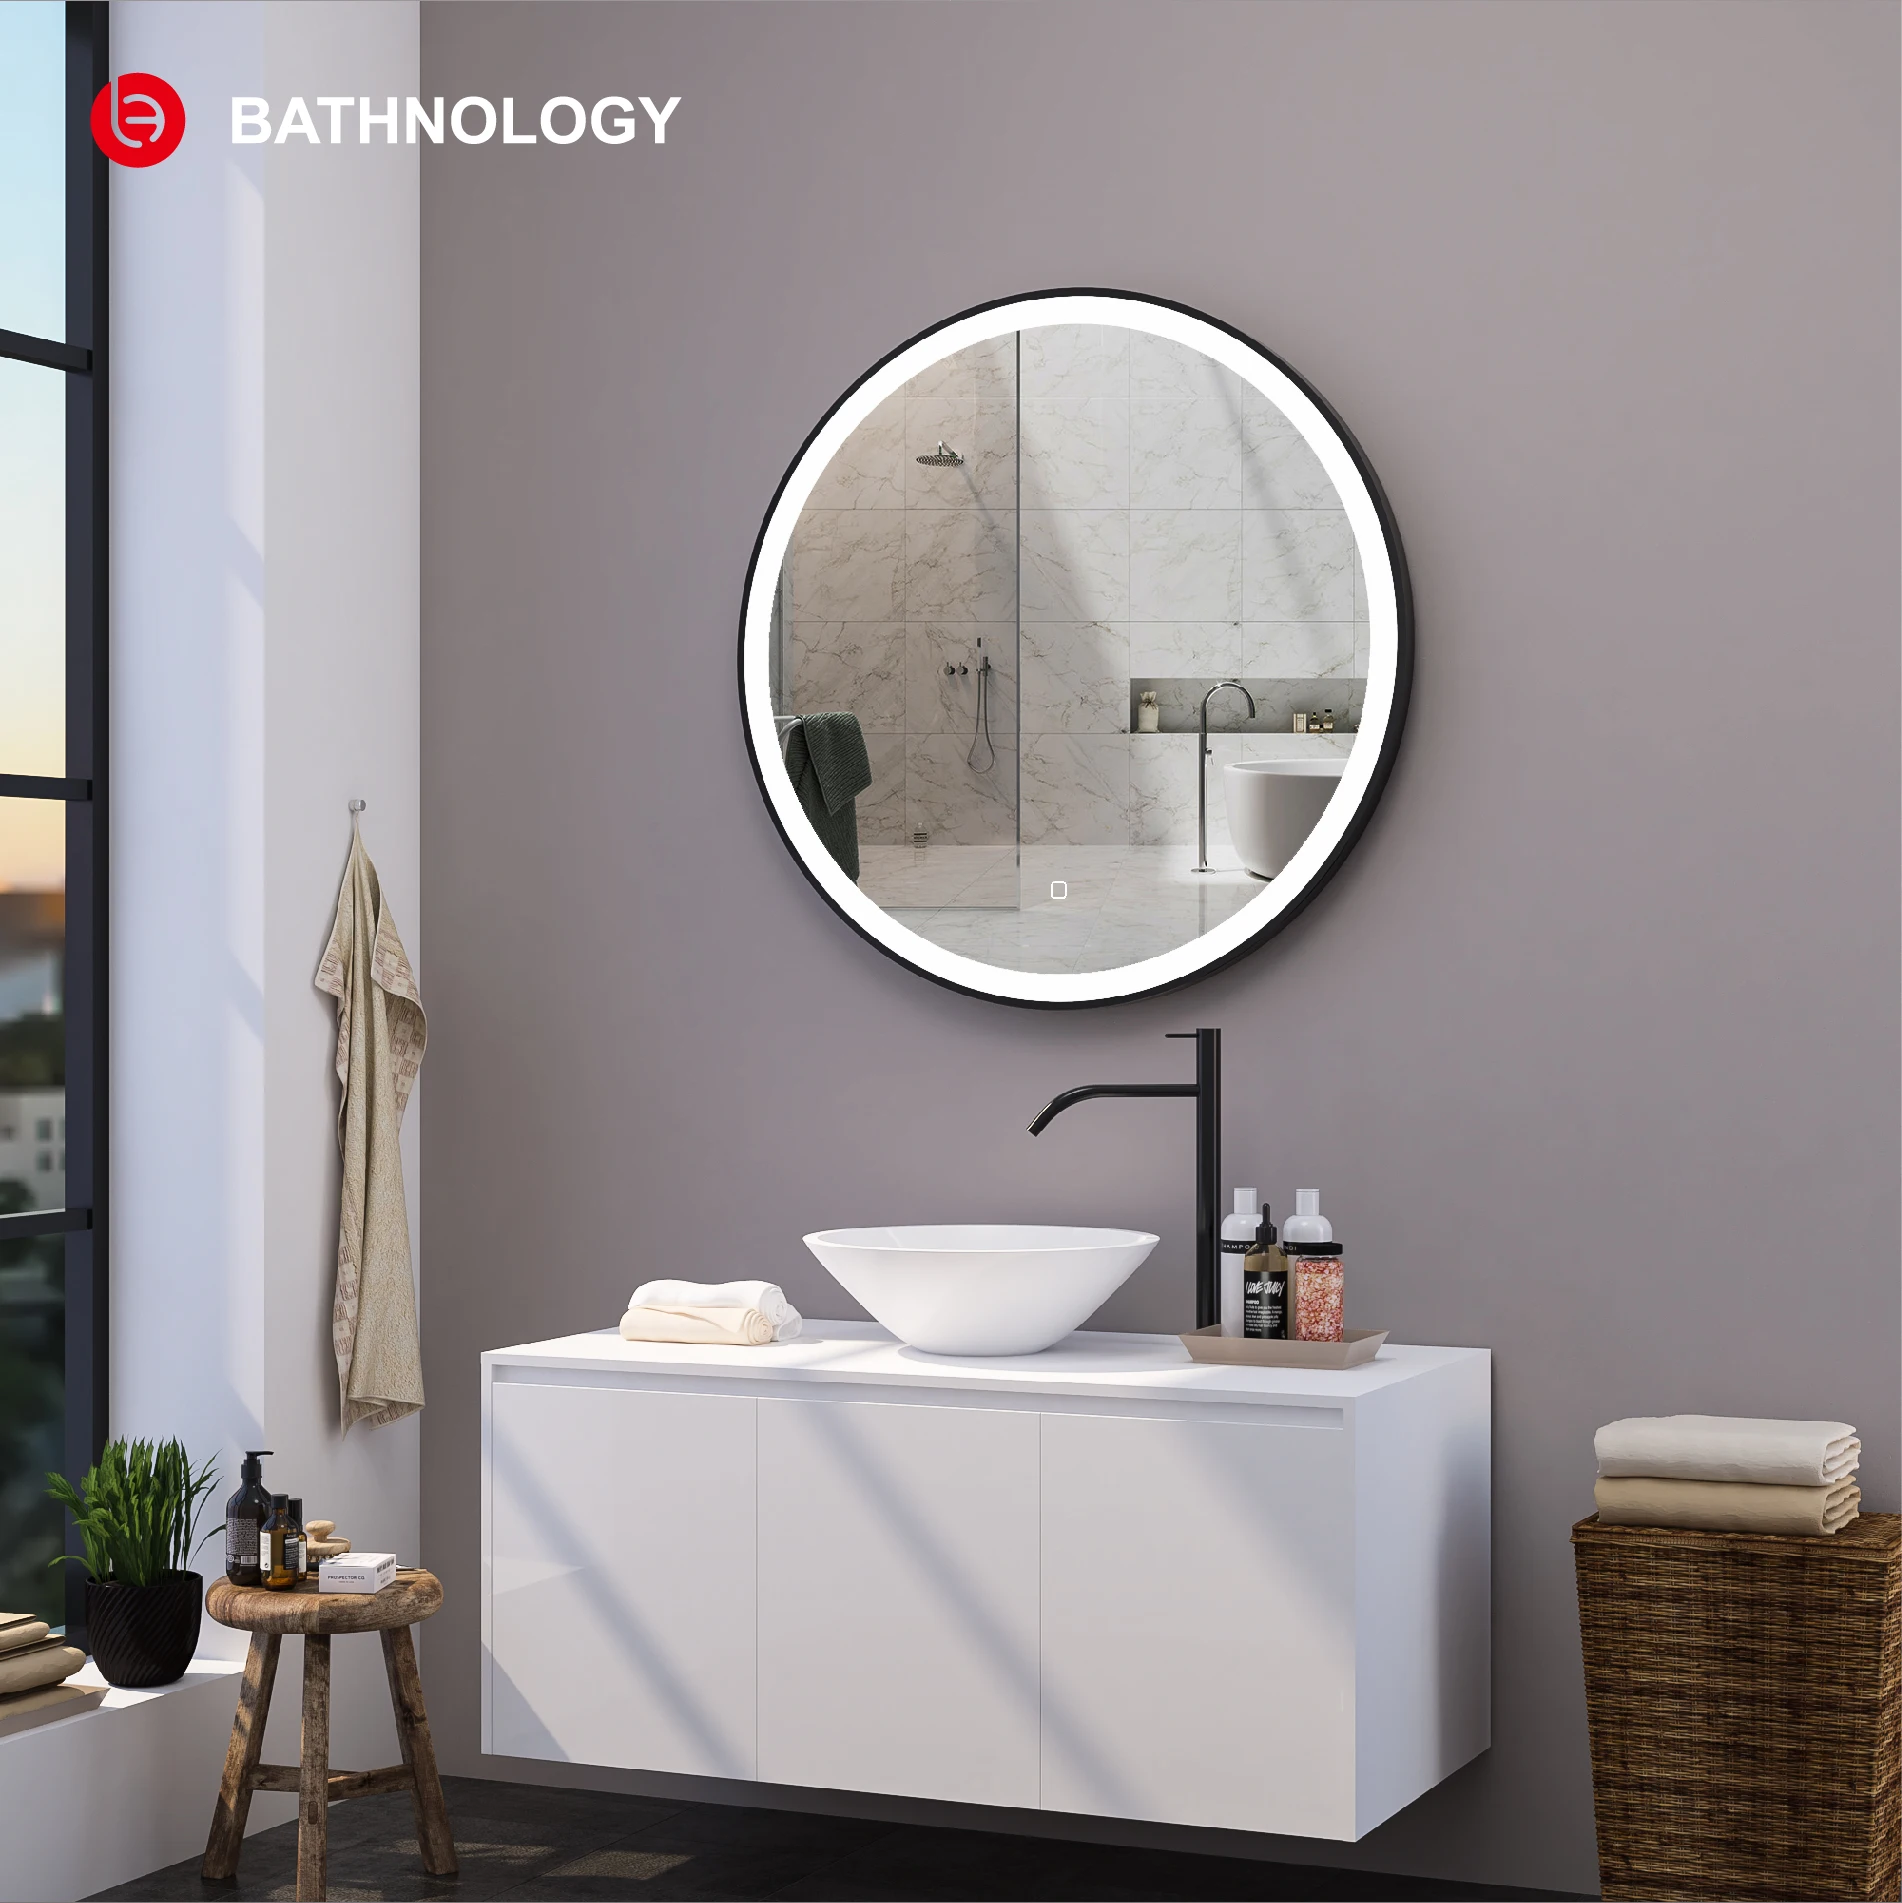 Hot Sale Mfa0808 Waterproof Bathroom Wall Mirror Led Smart Tv Vanity Mirror For Hotel Bathroom Mirror Buy Wall Mirror Led Mirrors